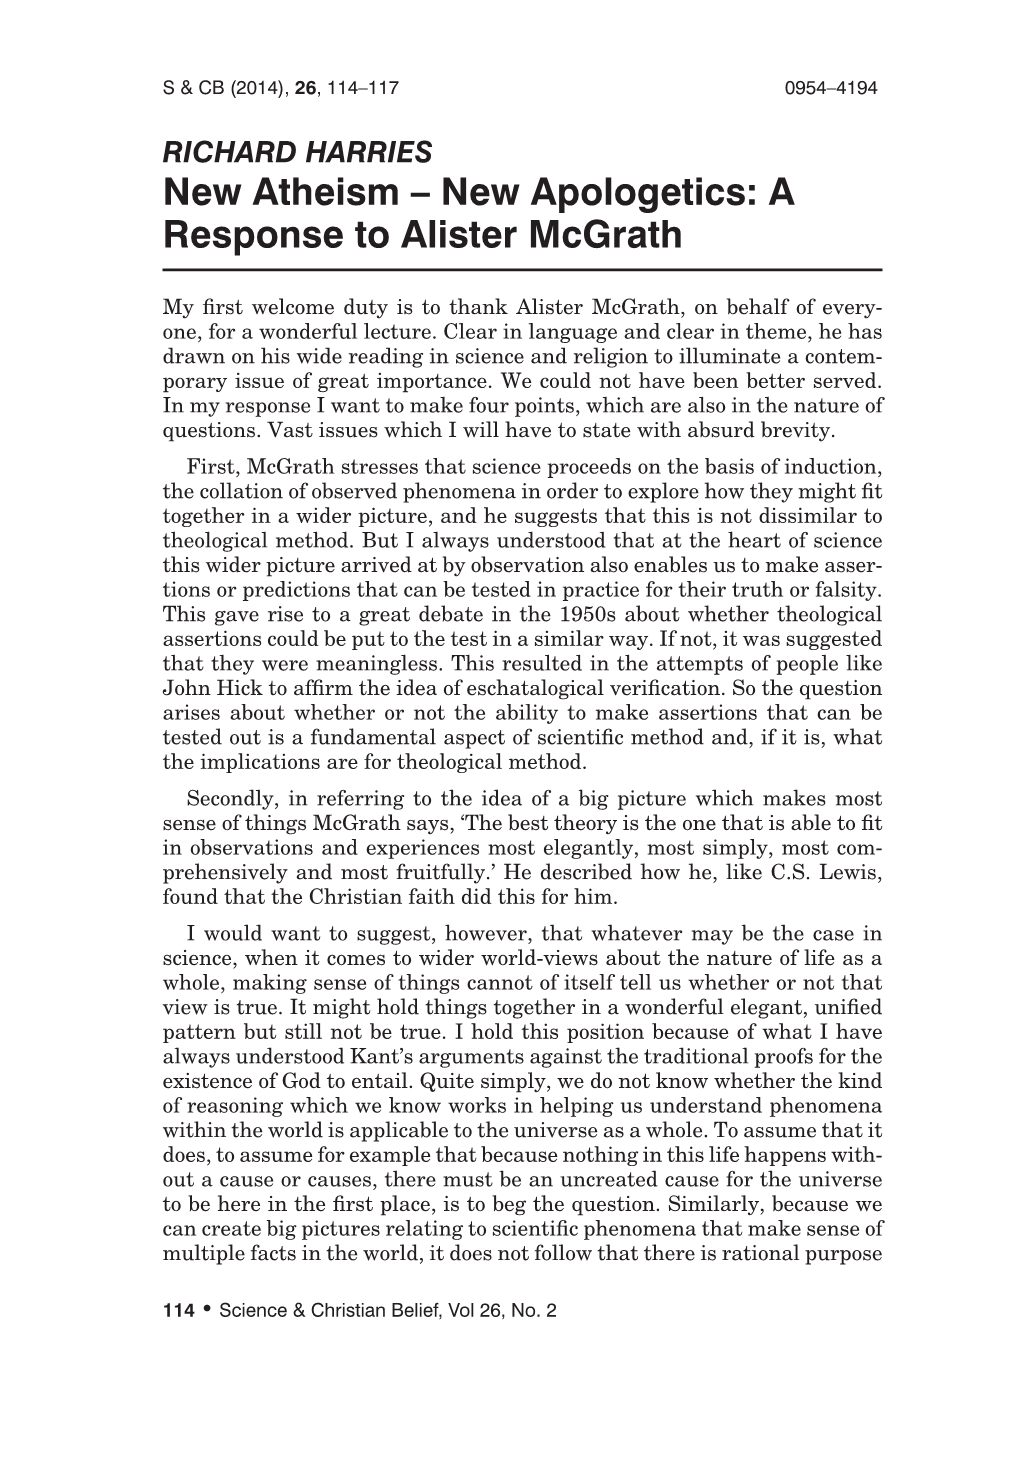 New Atheism – New Apologetics: a Response to Alister Mcgrath